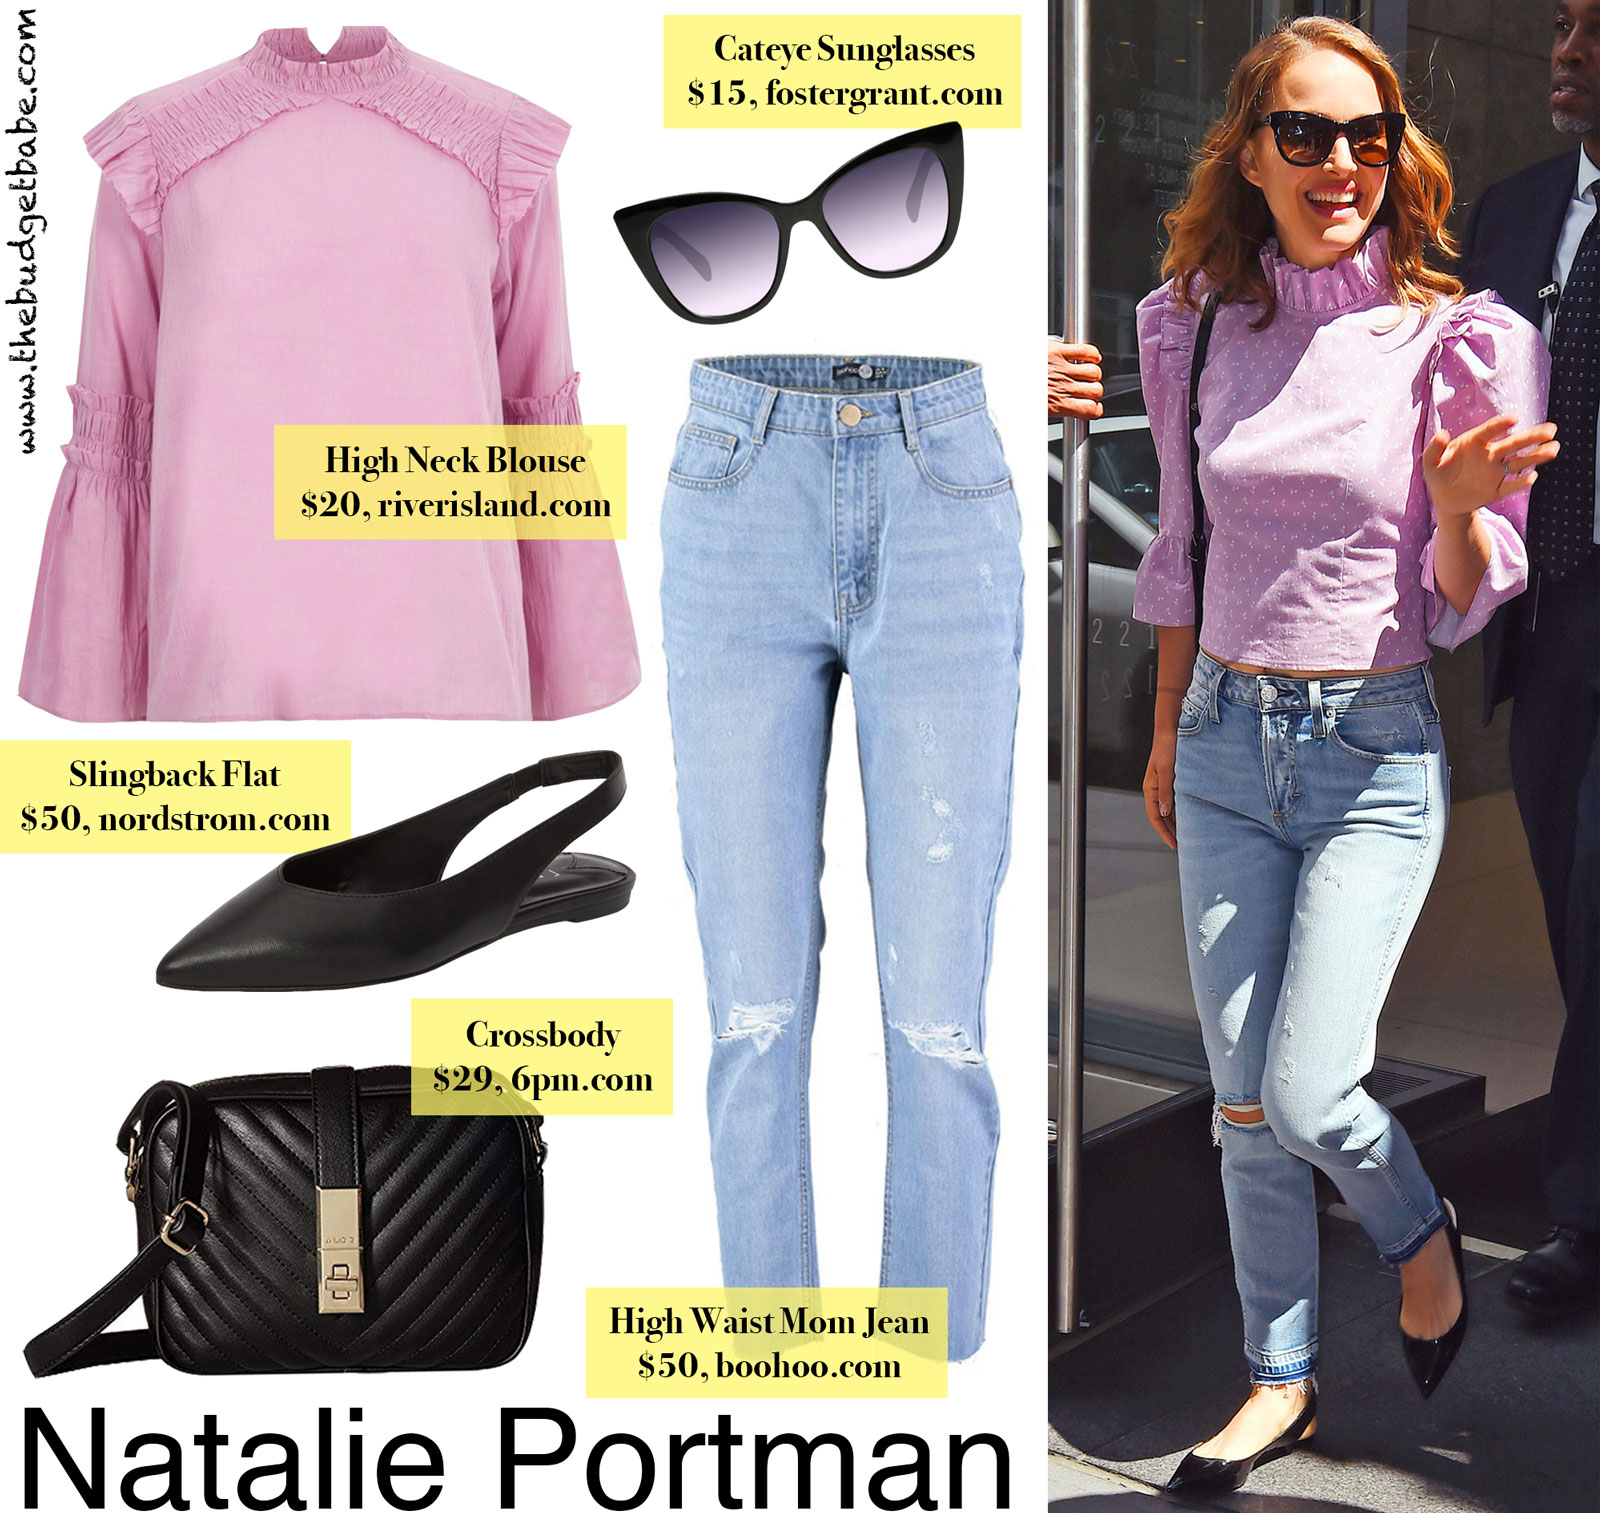 Natalie Portman High Neck Blouse Look for Less